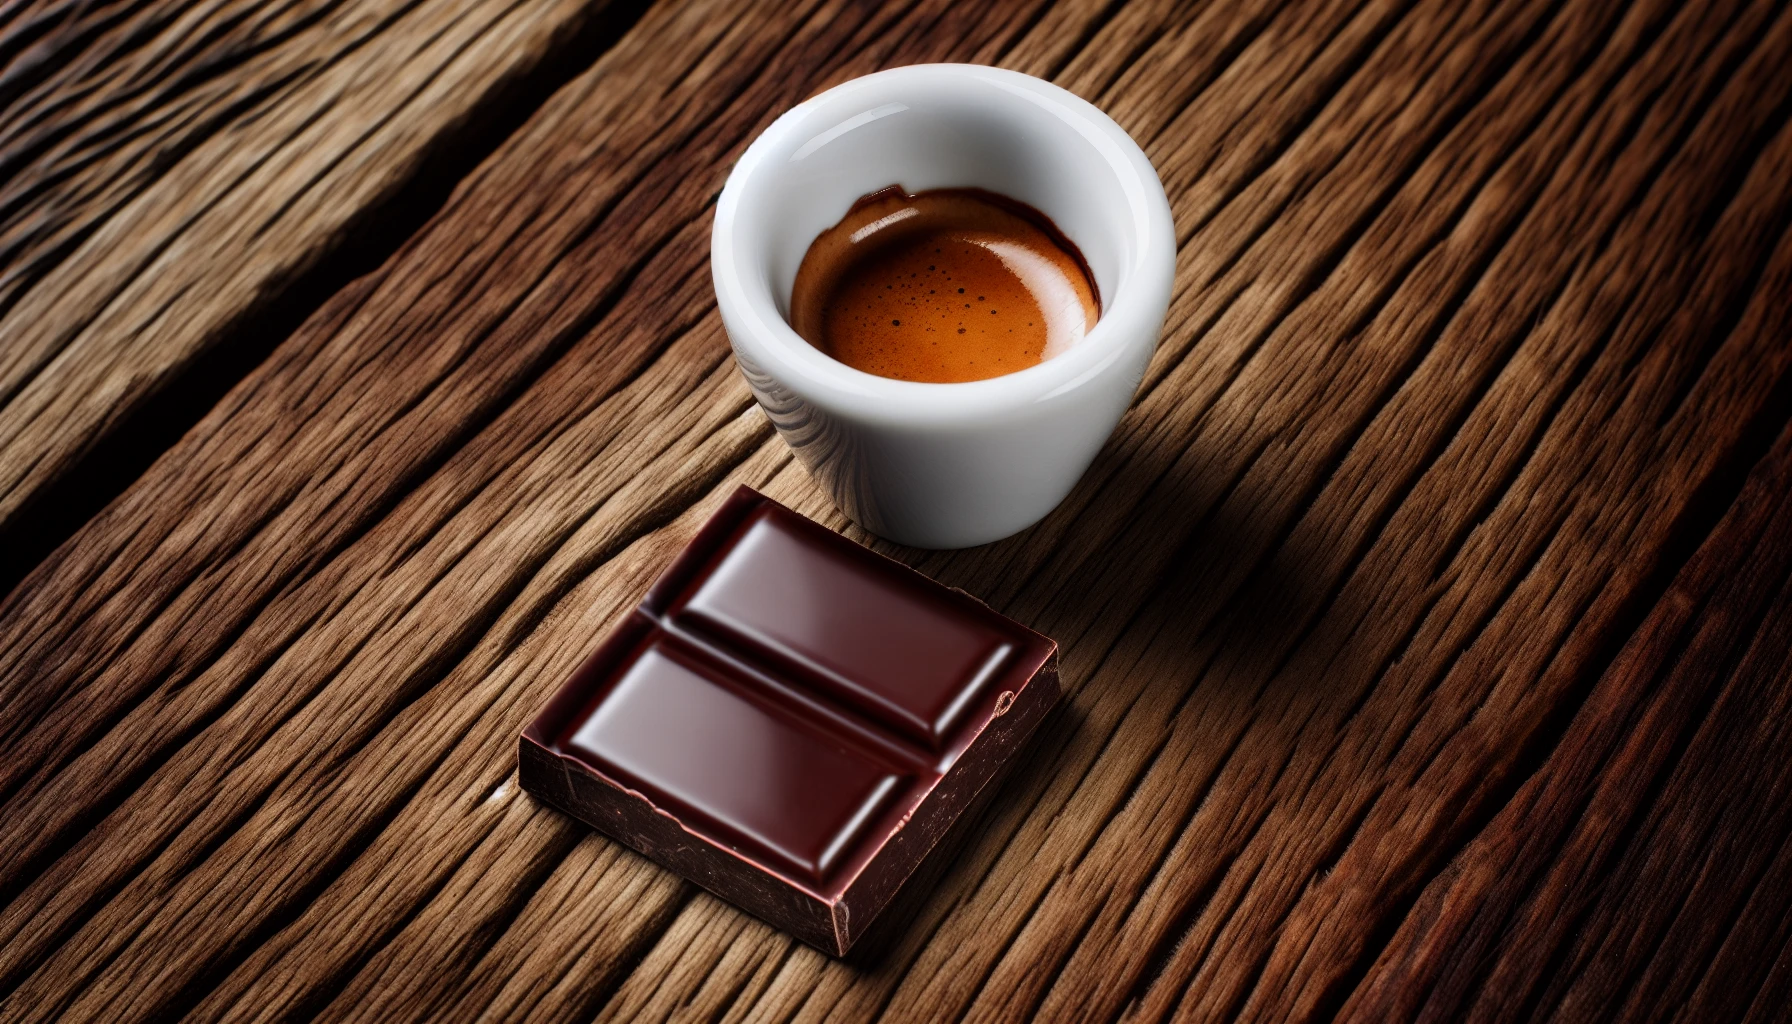 Rich dark chocolate and espresso